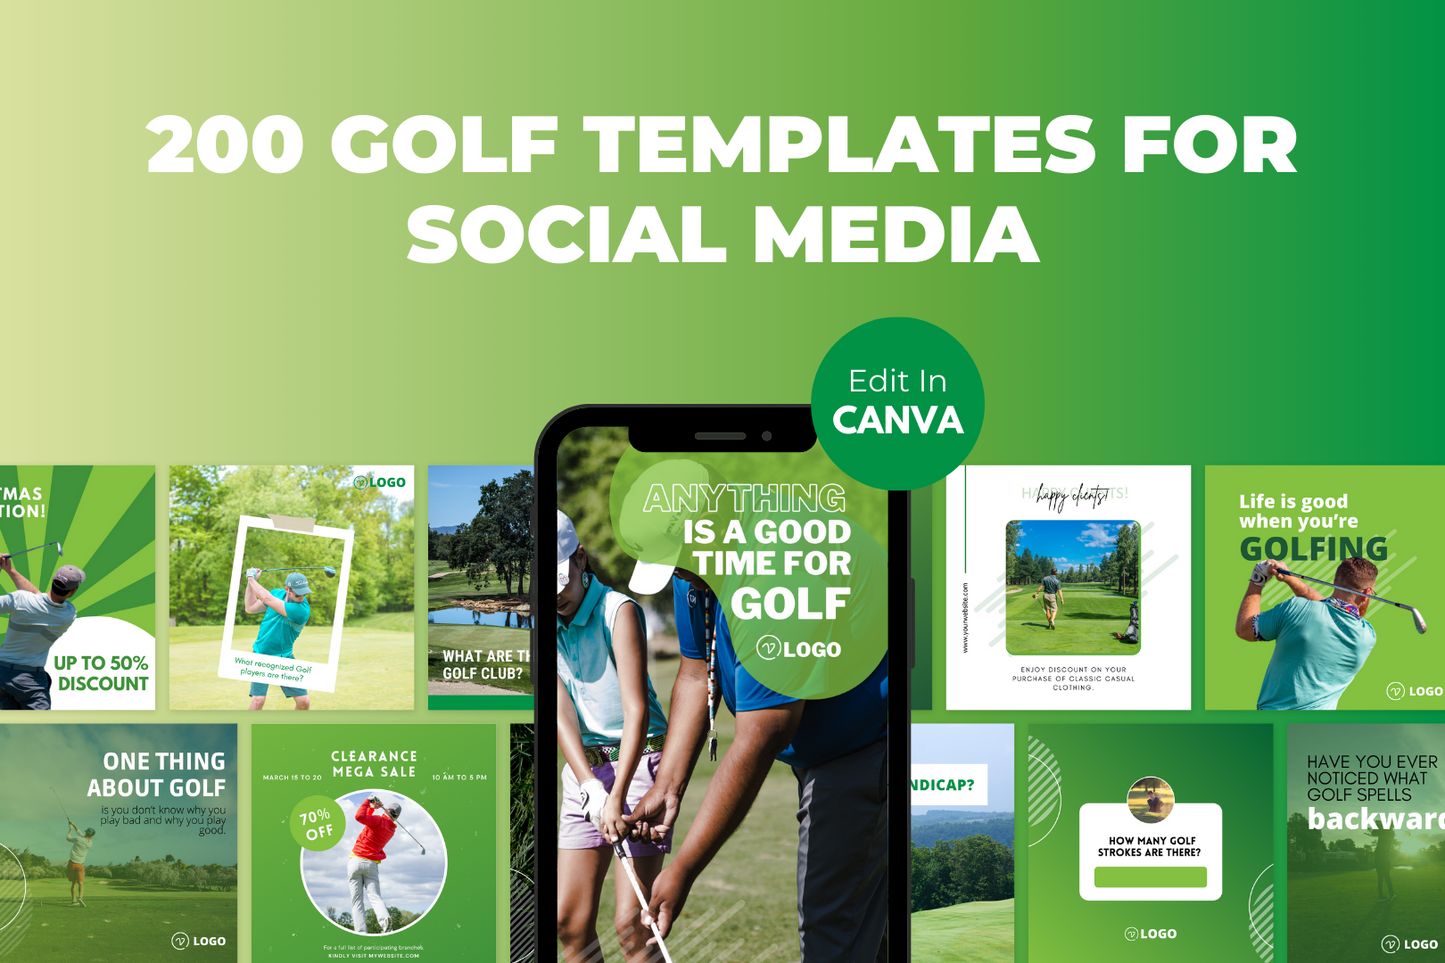 Golf Social Media Templates - 200 Templates